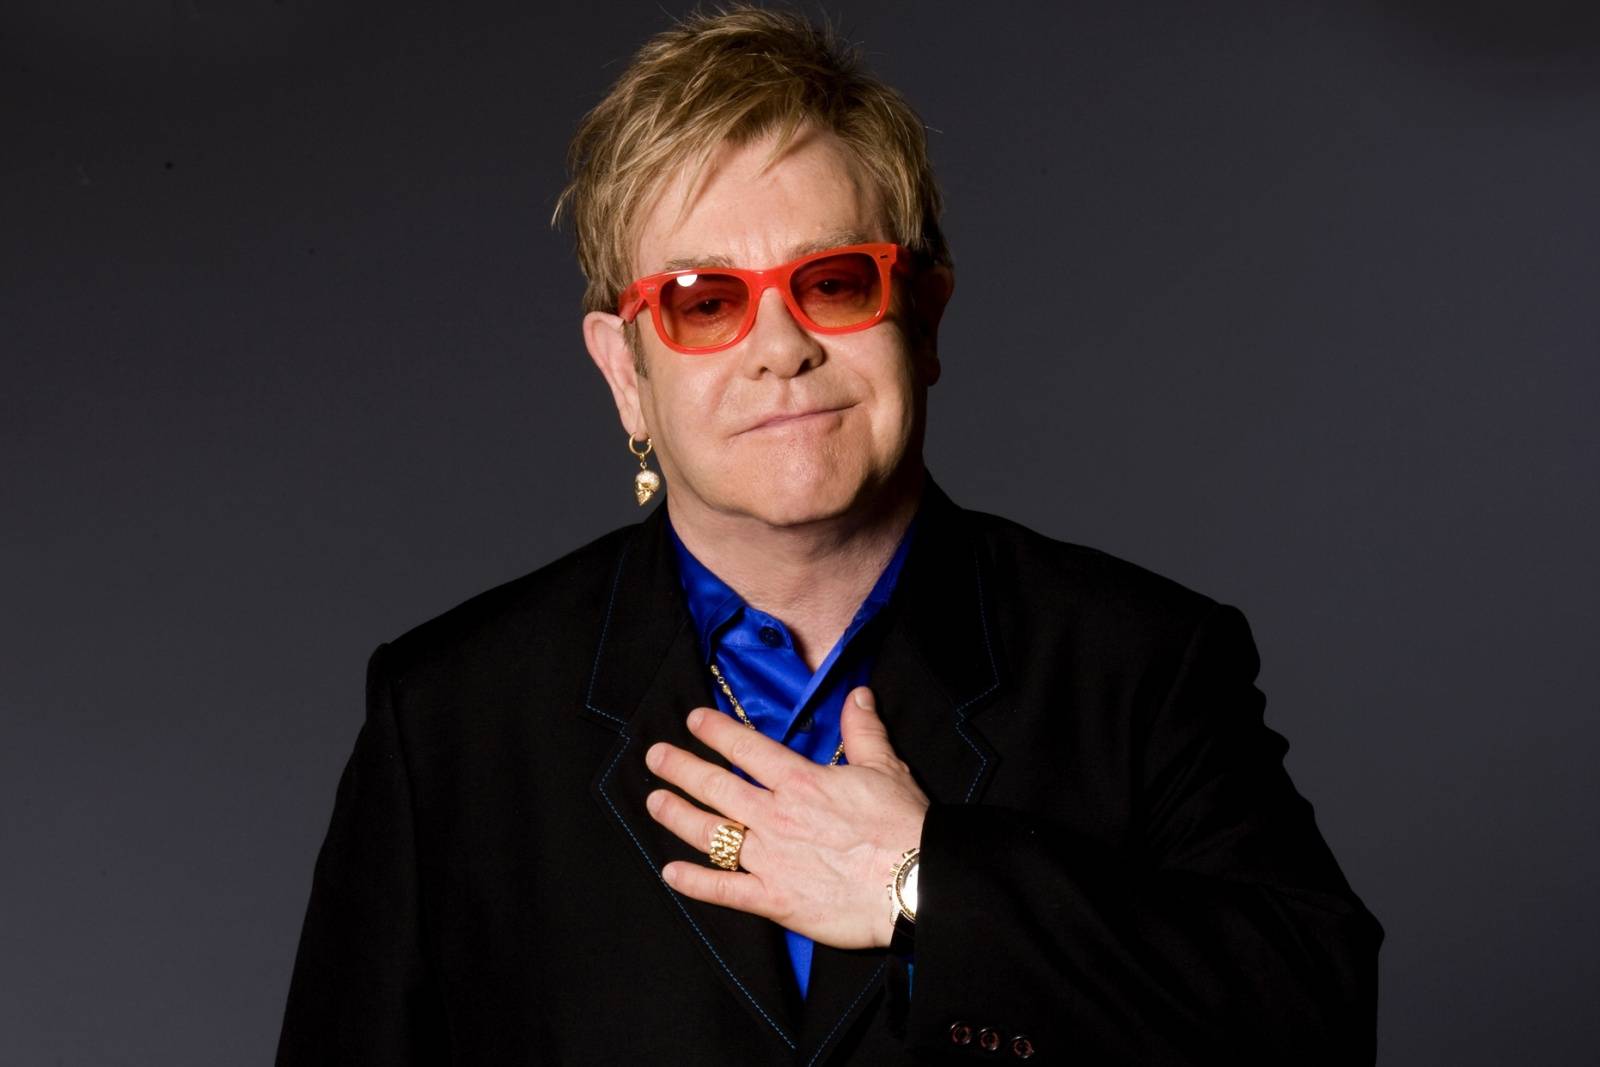 RECENZE:  Elton John má i na prahu sedmdesátky energii mladíka